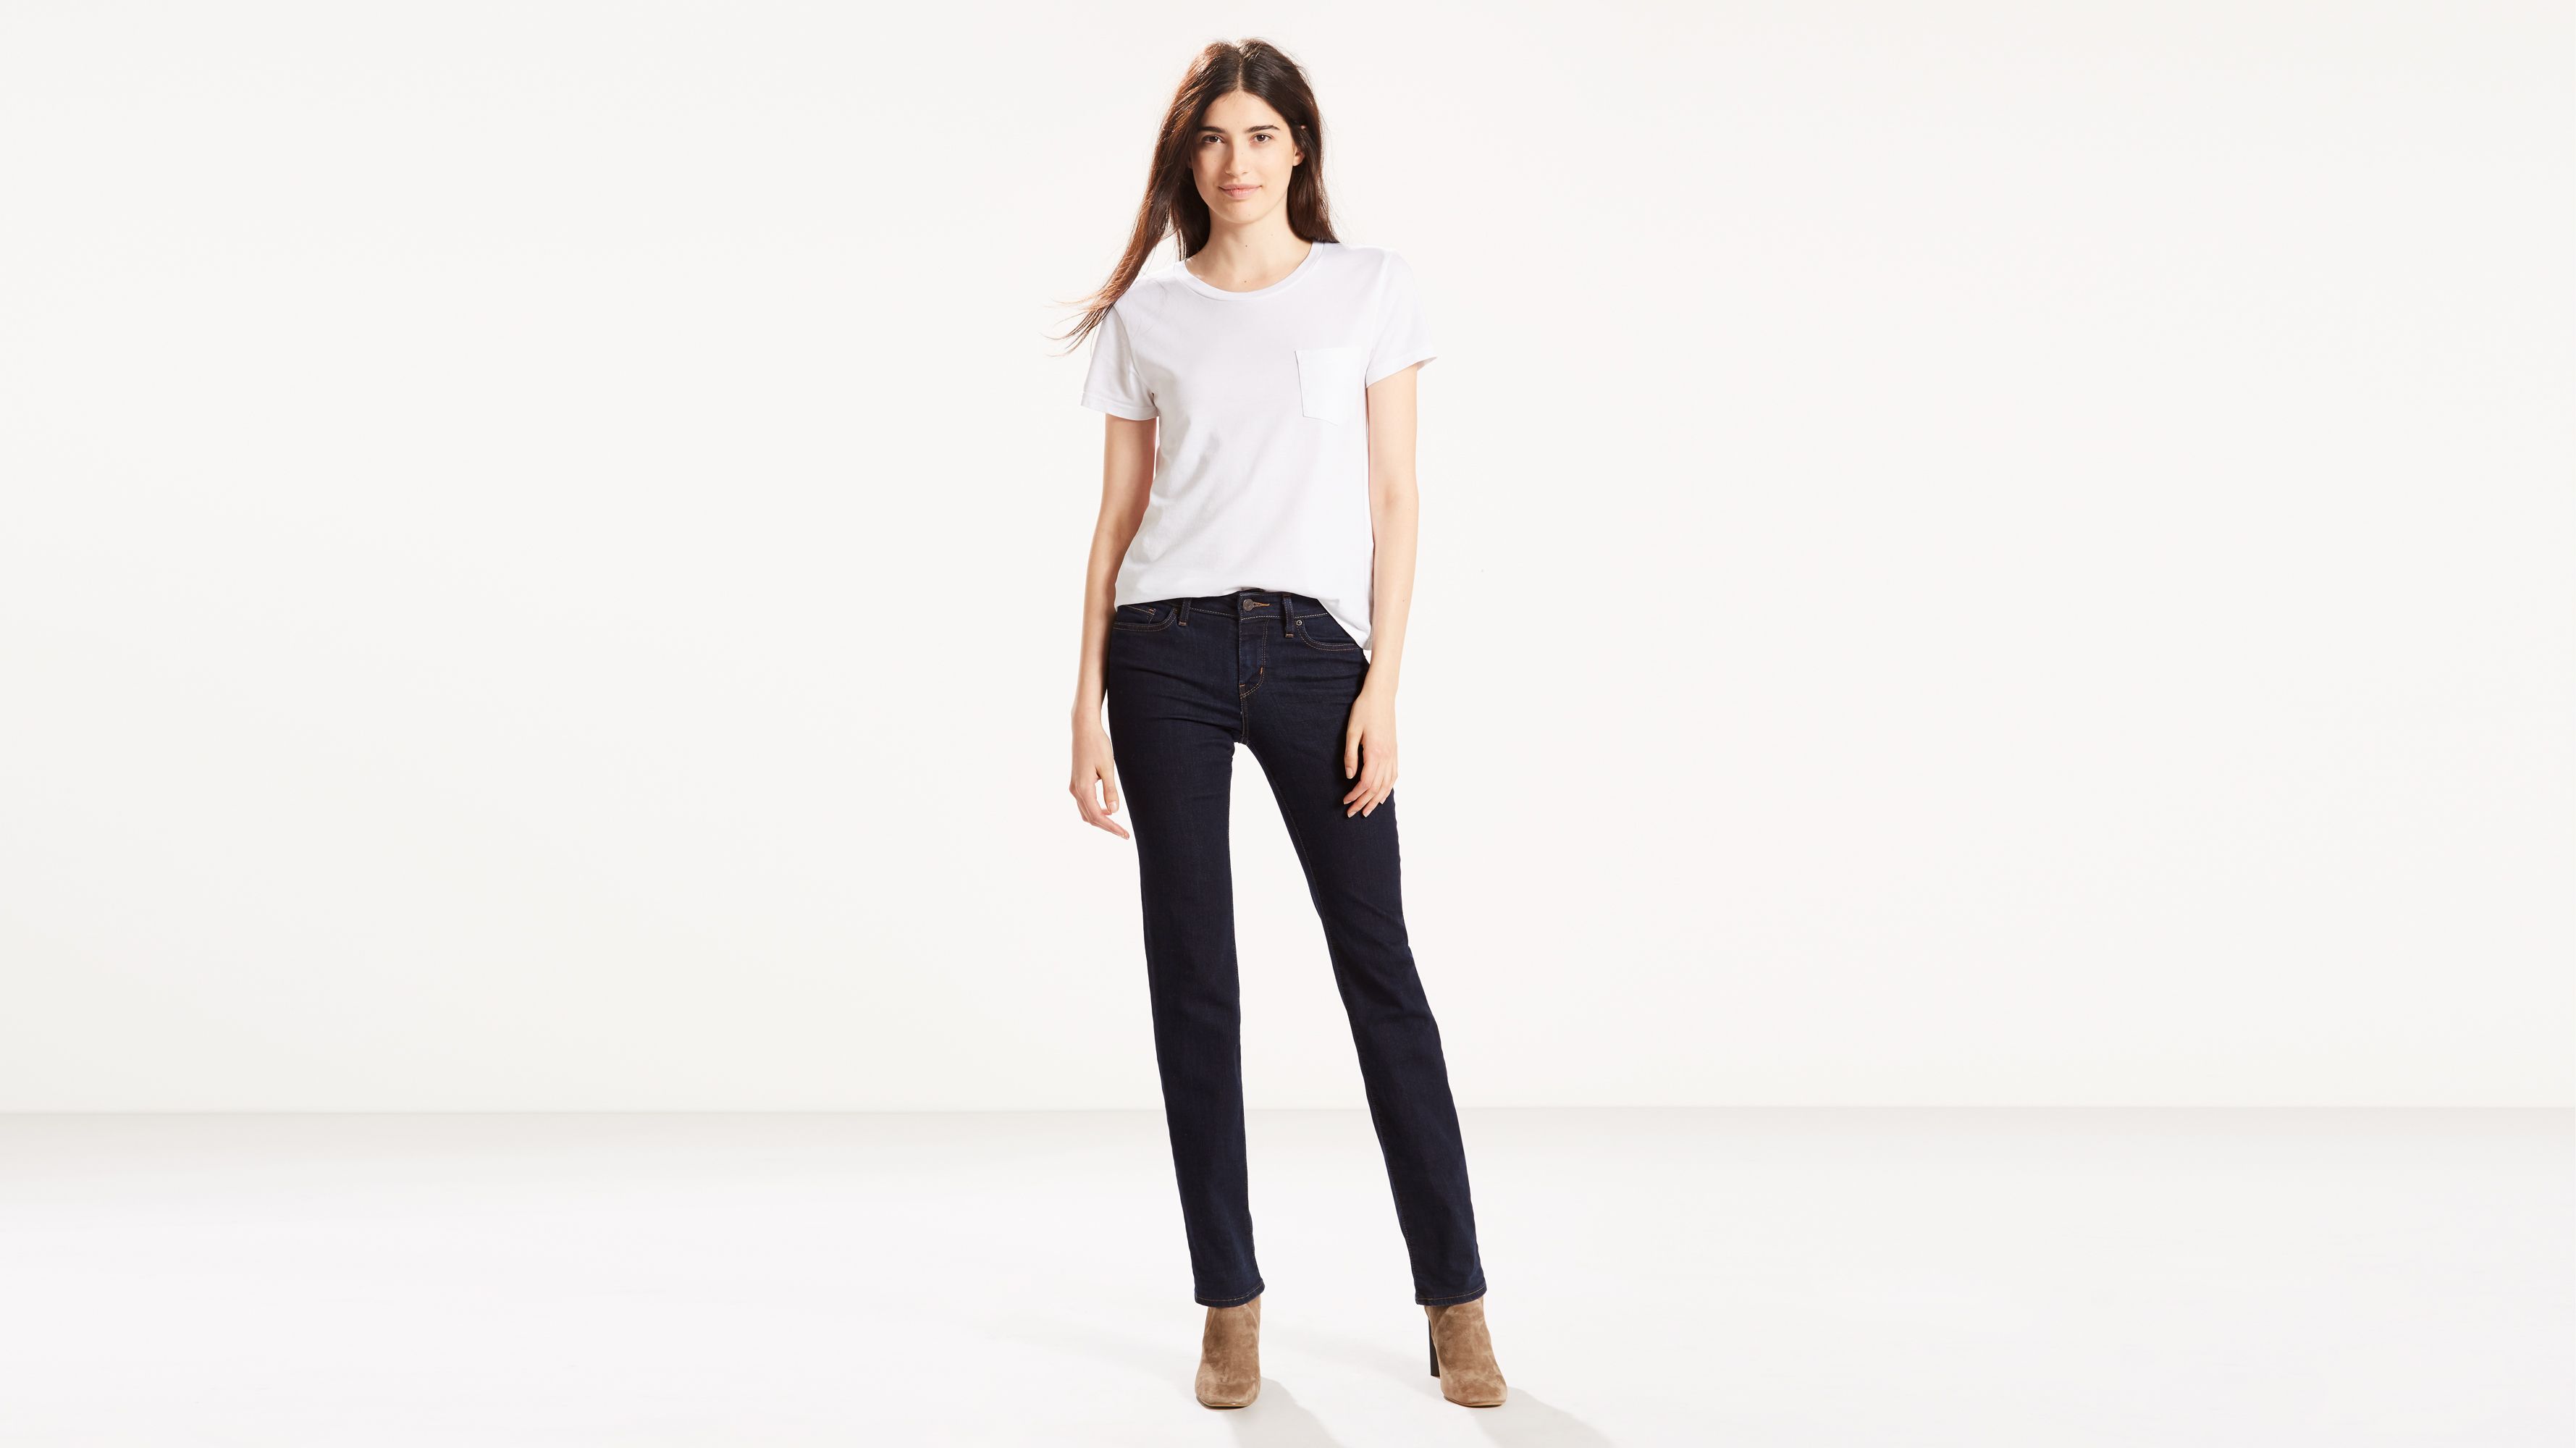 levi's 714 straight women's jeans